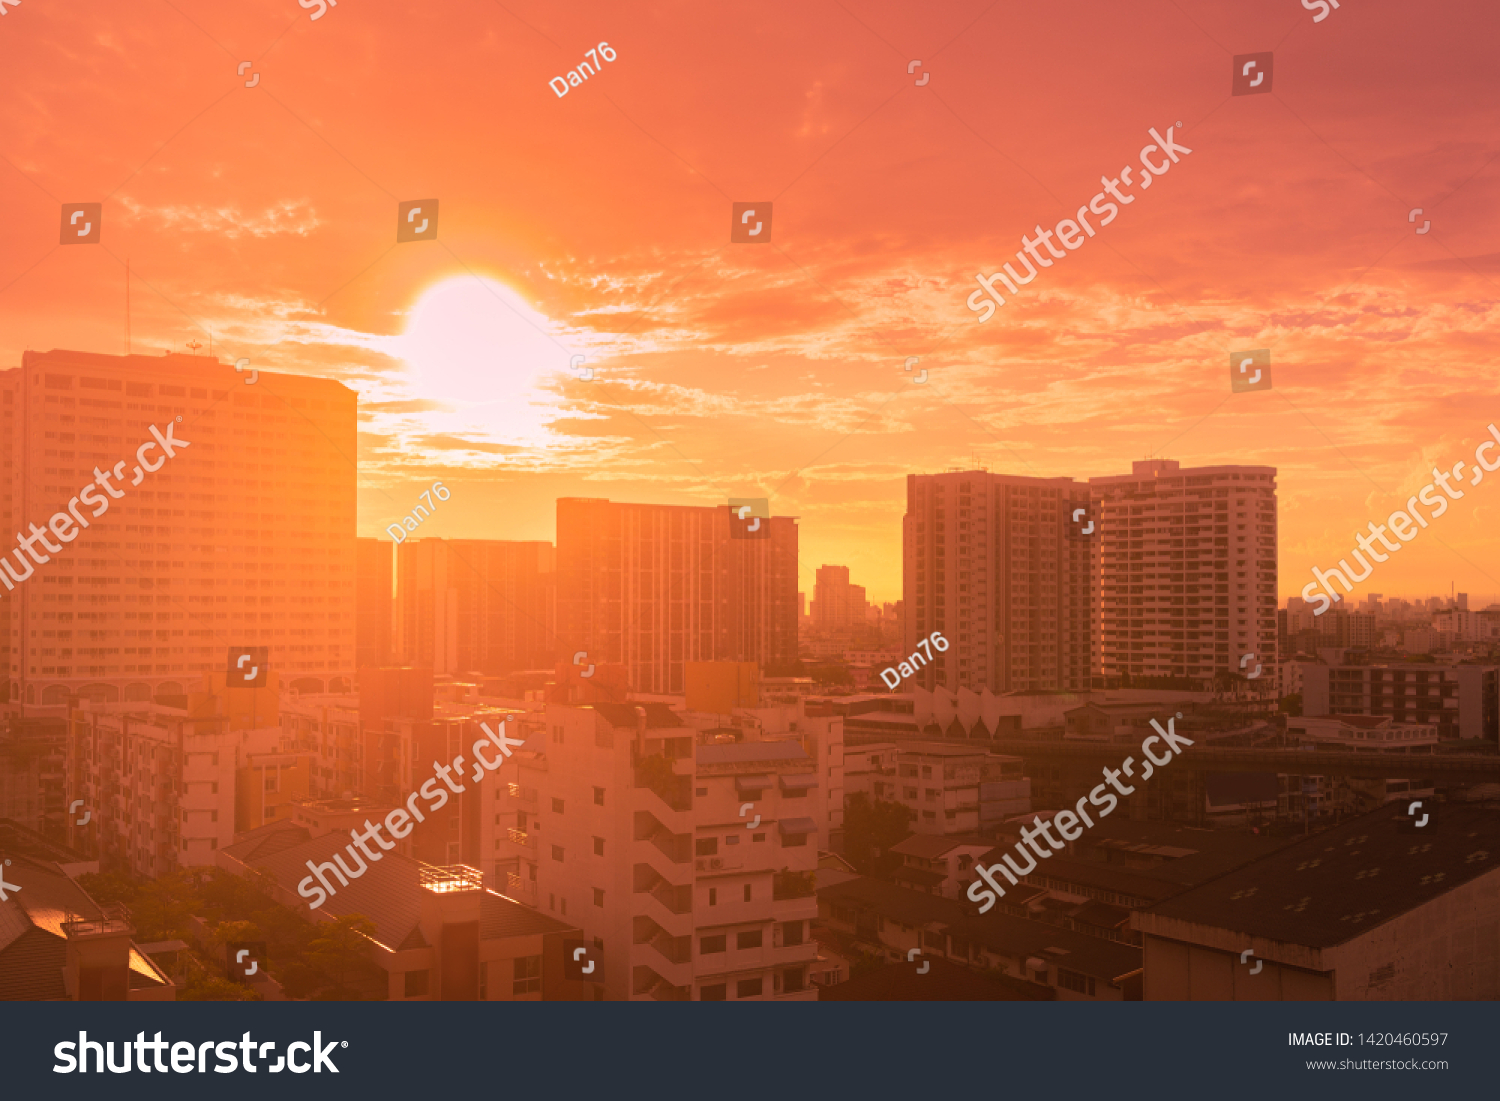 Golden light sunset or sunrise in summer Bangkok city Thailand, Hot weather image #1420460597